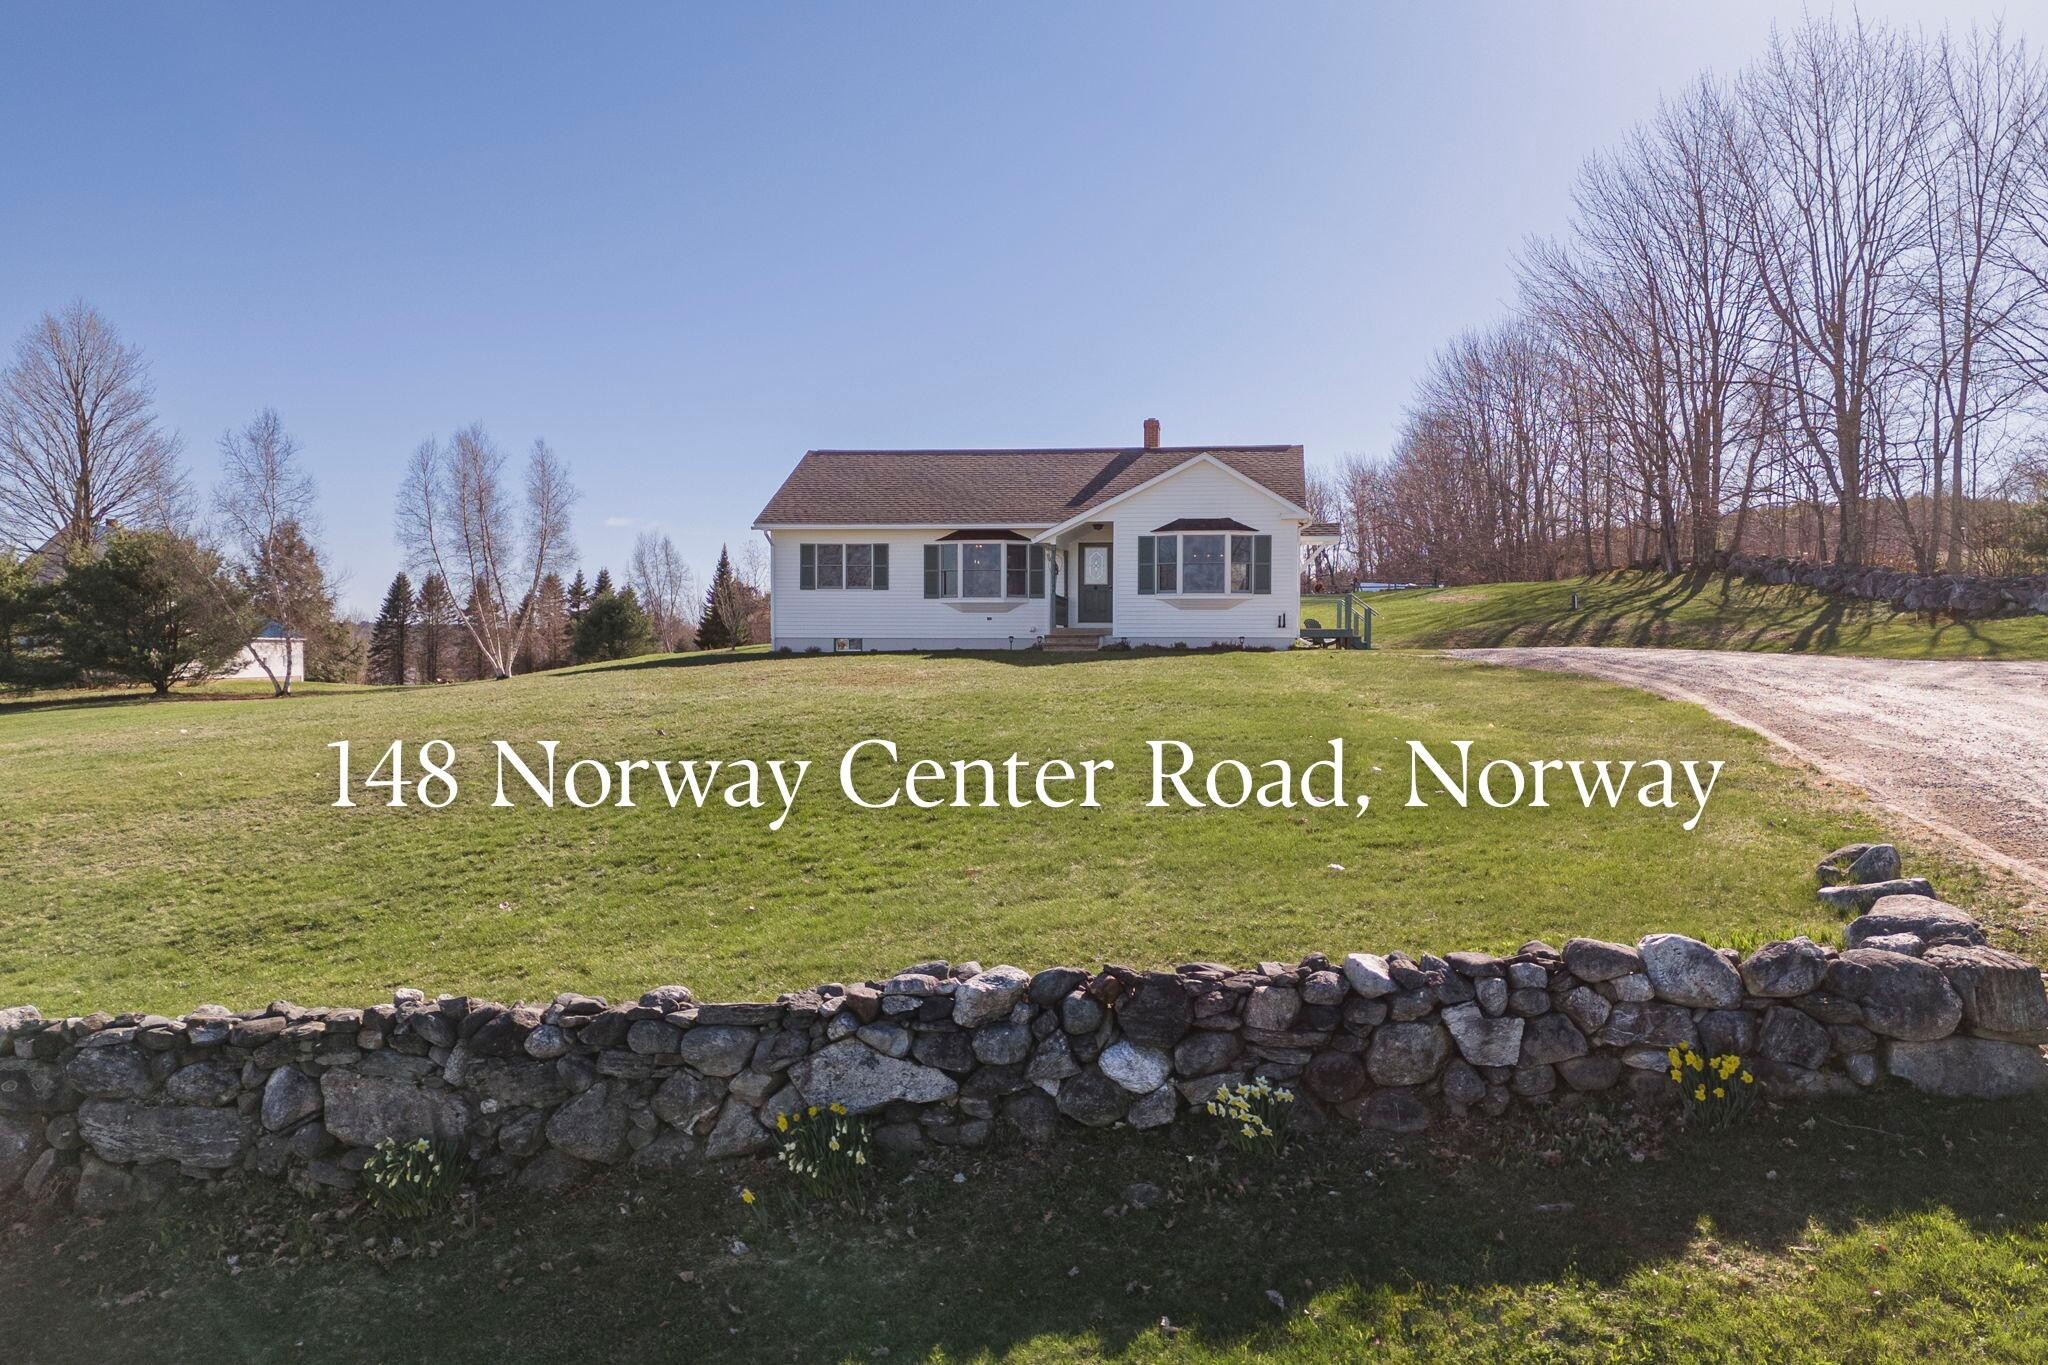 1. 148 Norway Center Road